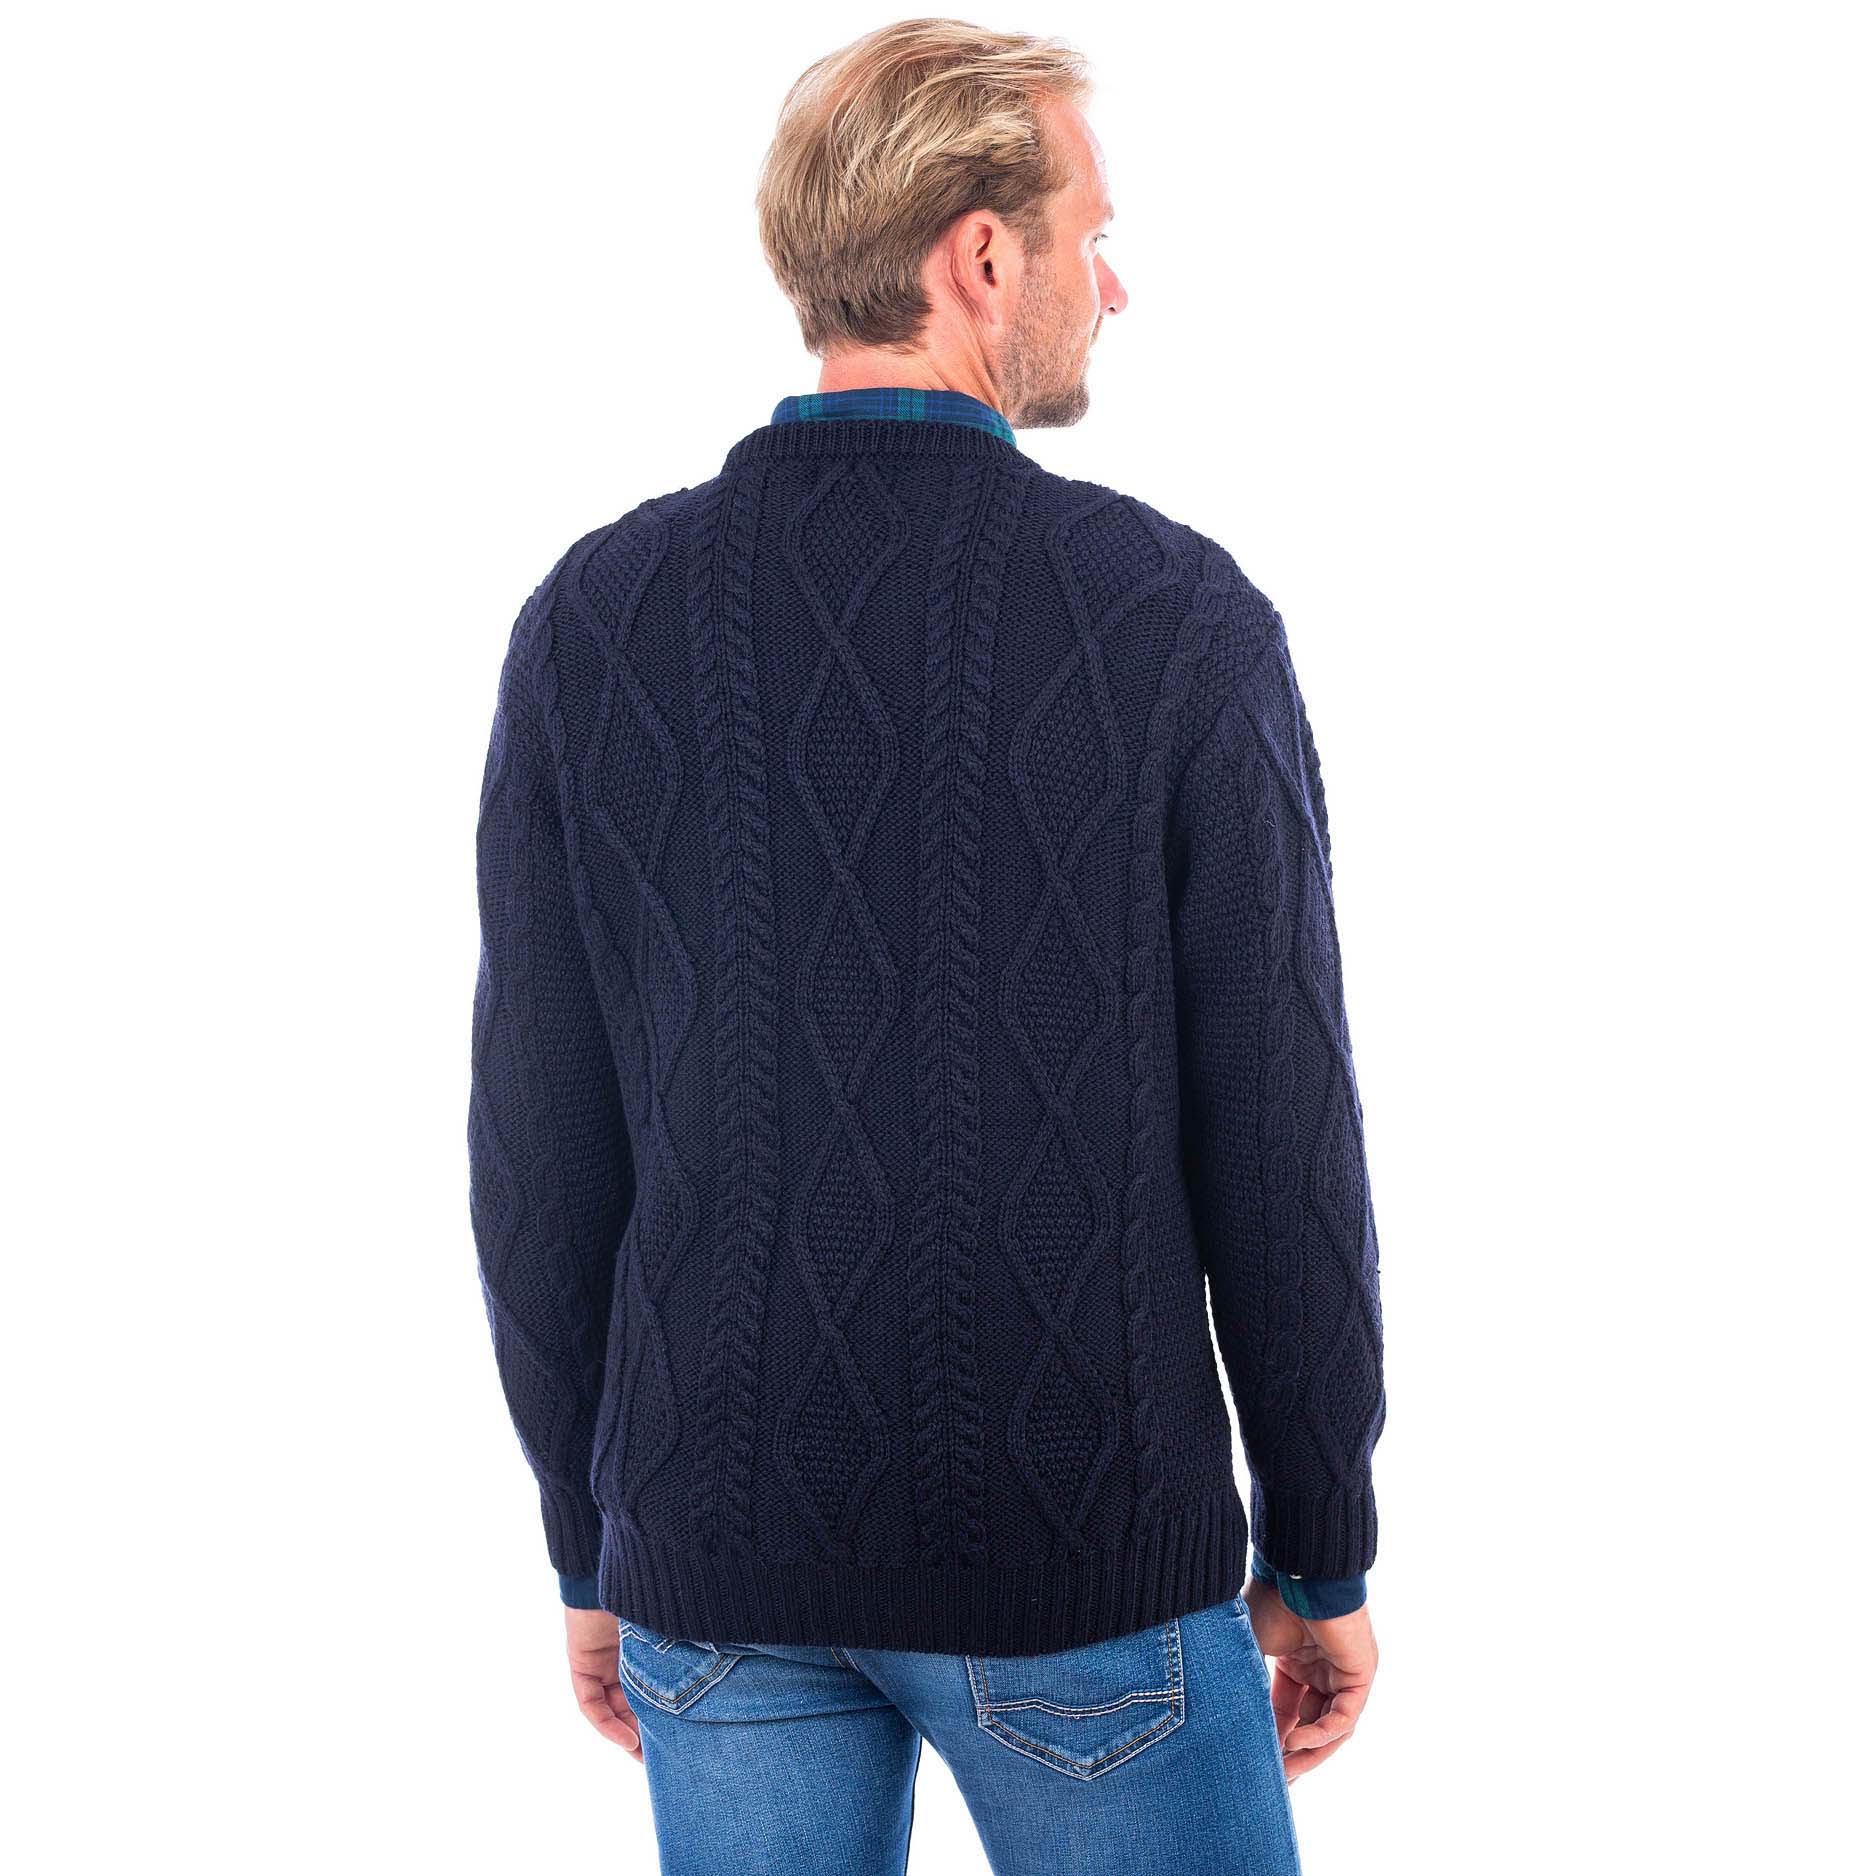 Product image for Irish Sweater | Aran Knit Crew Neck Mens Sweater